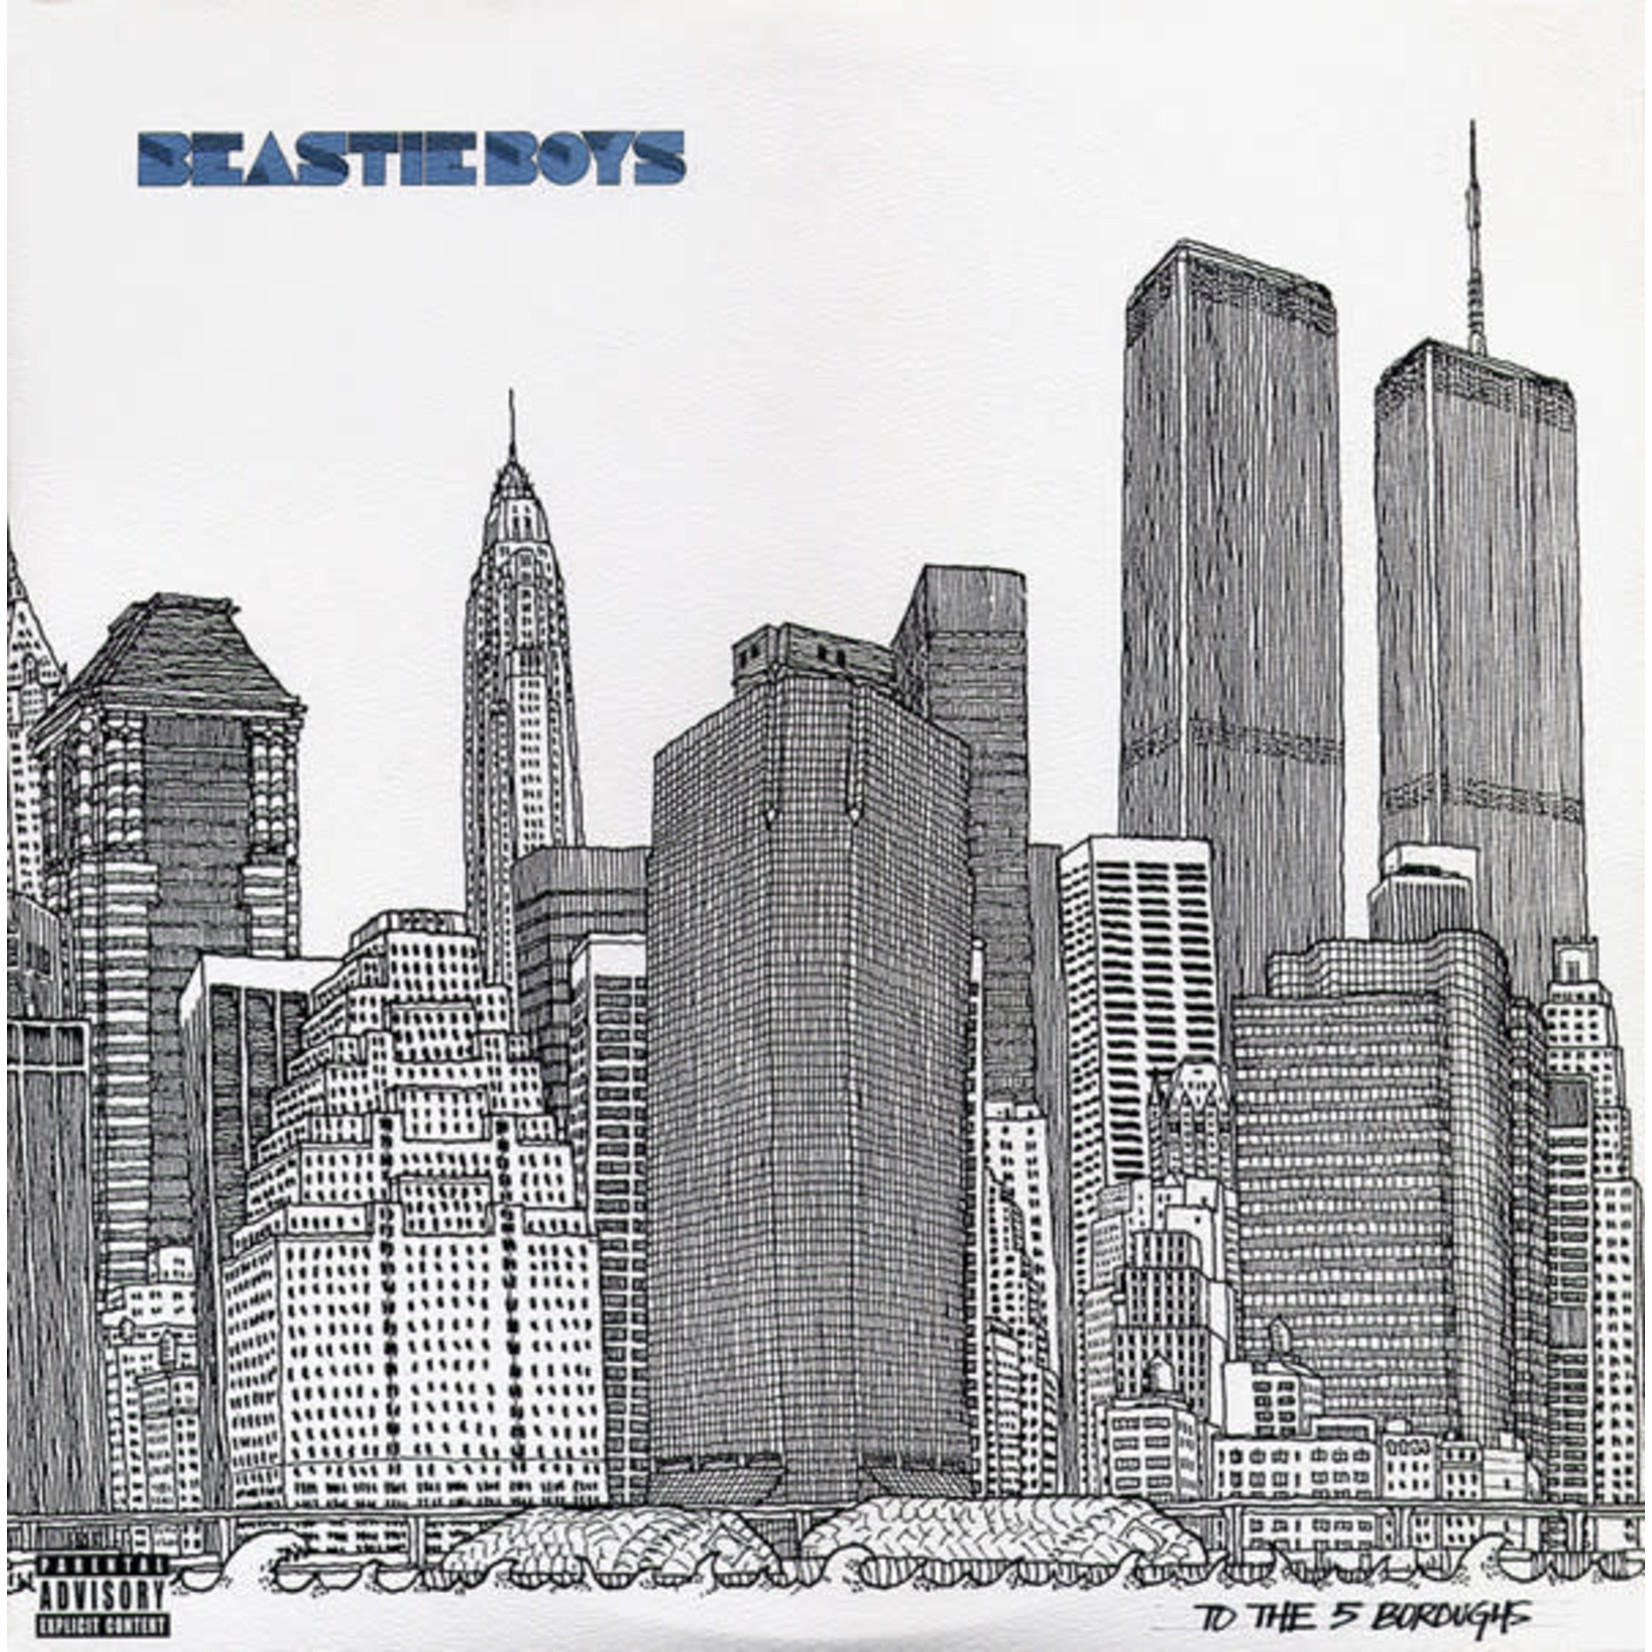 [New] Beastie Boys - To the 5 Boroughs (2LP, gatefold)